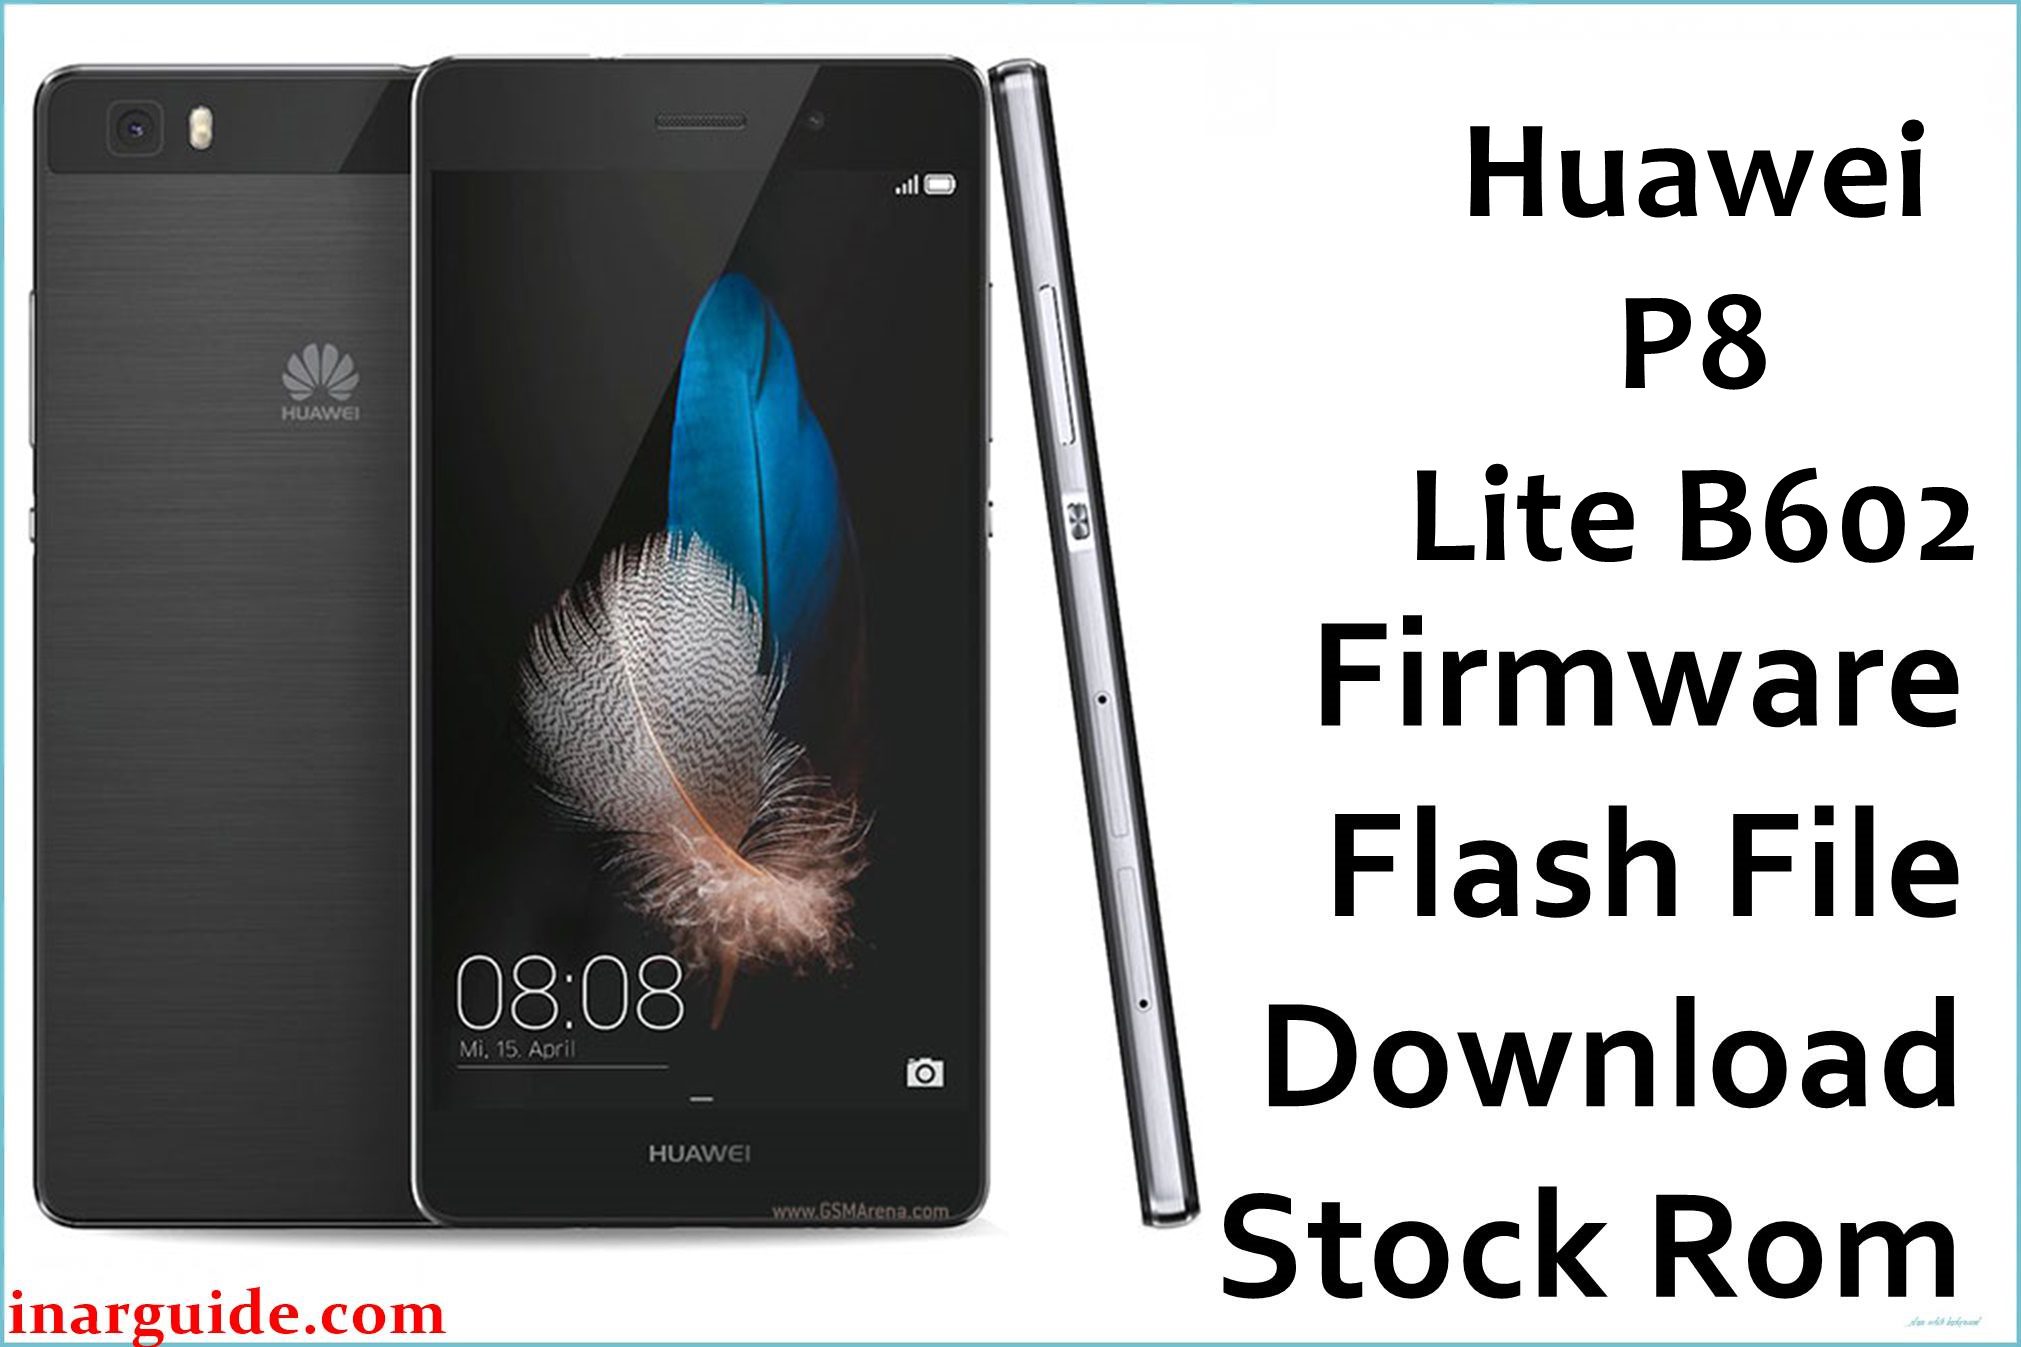 Huawei P8 Lite B602